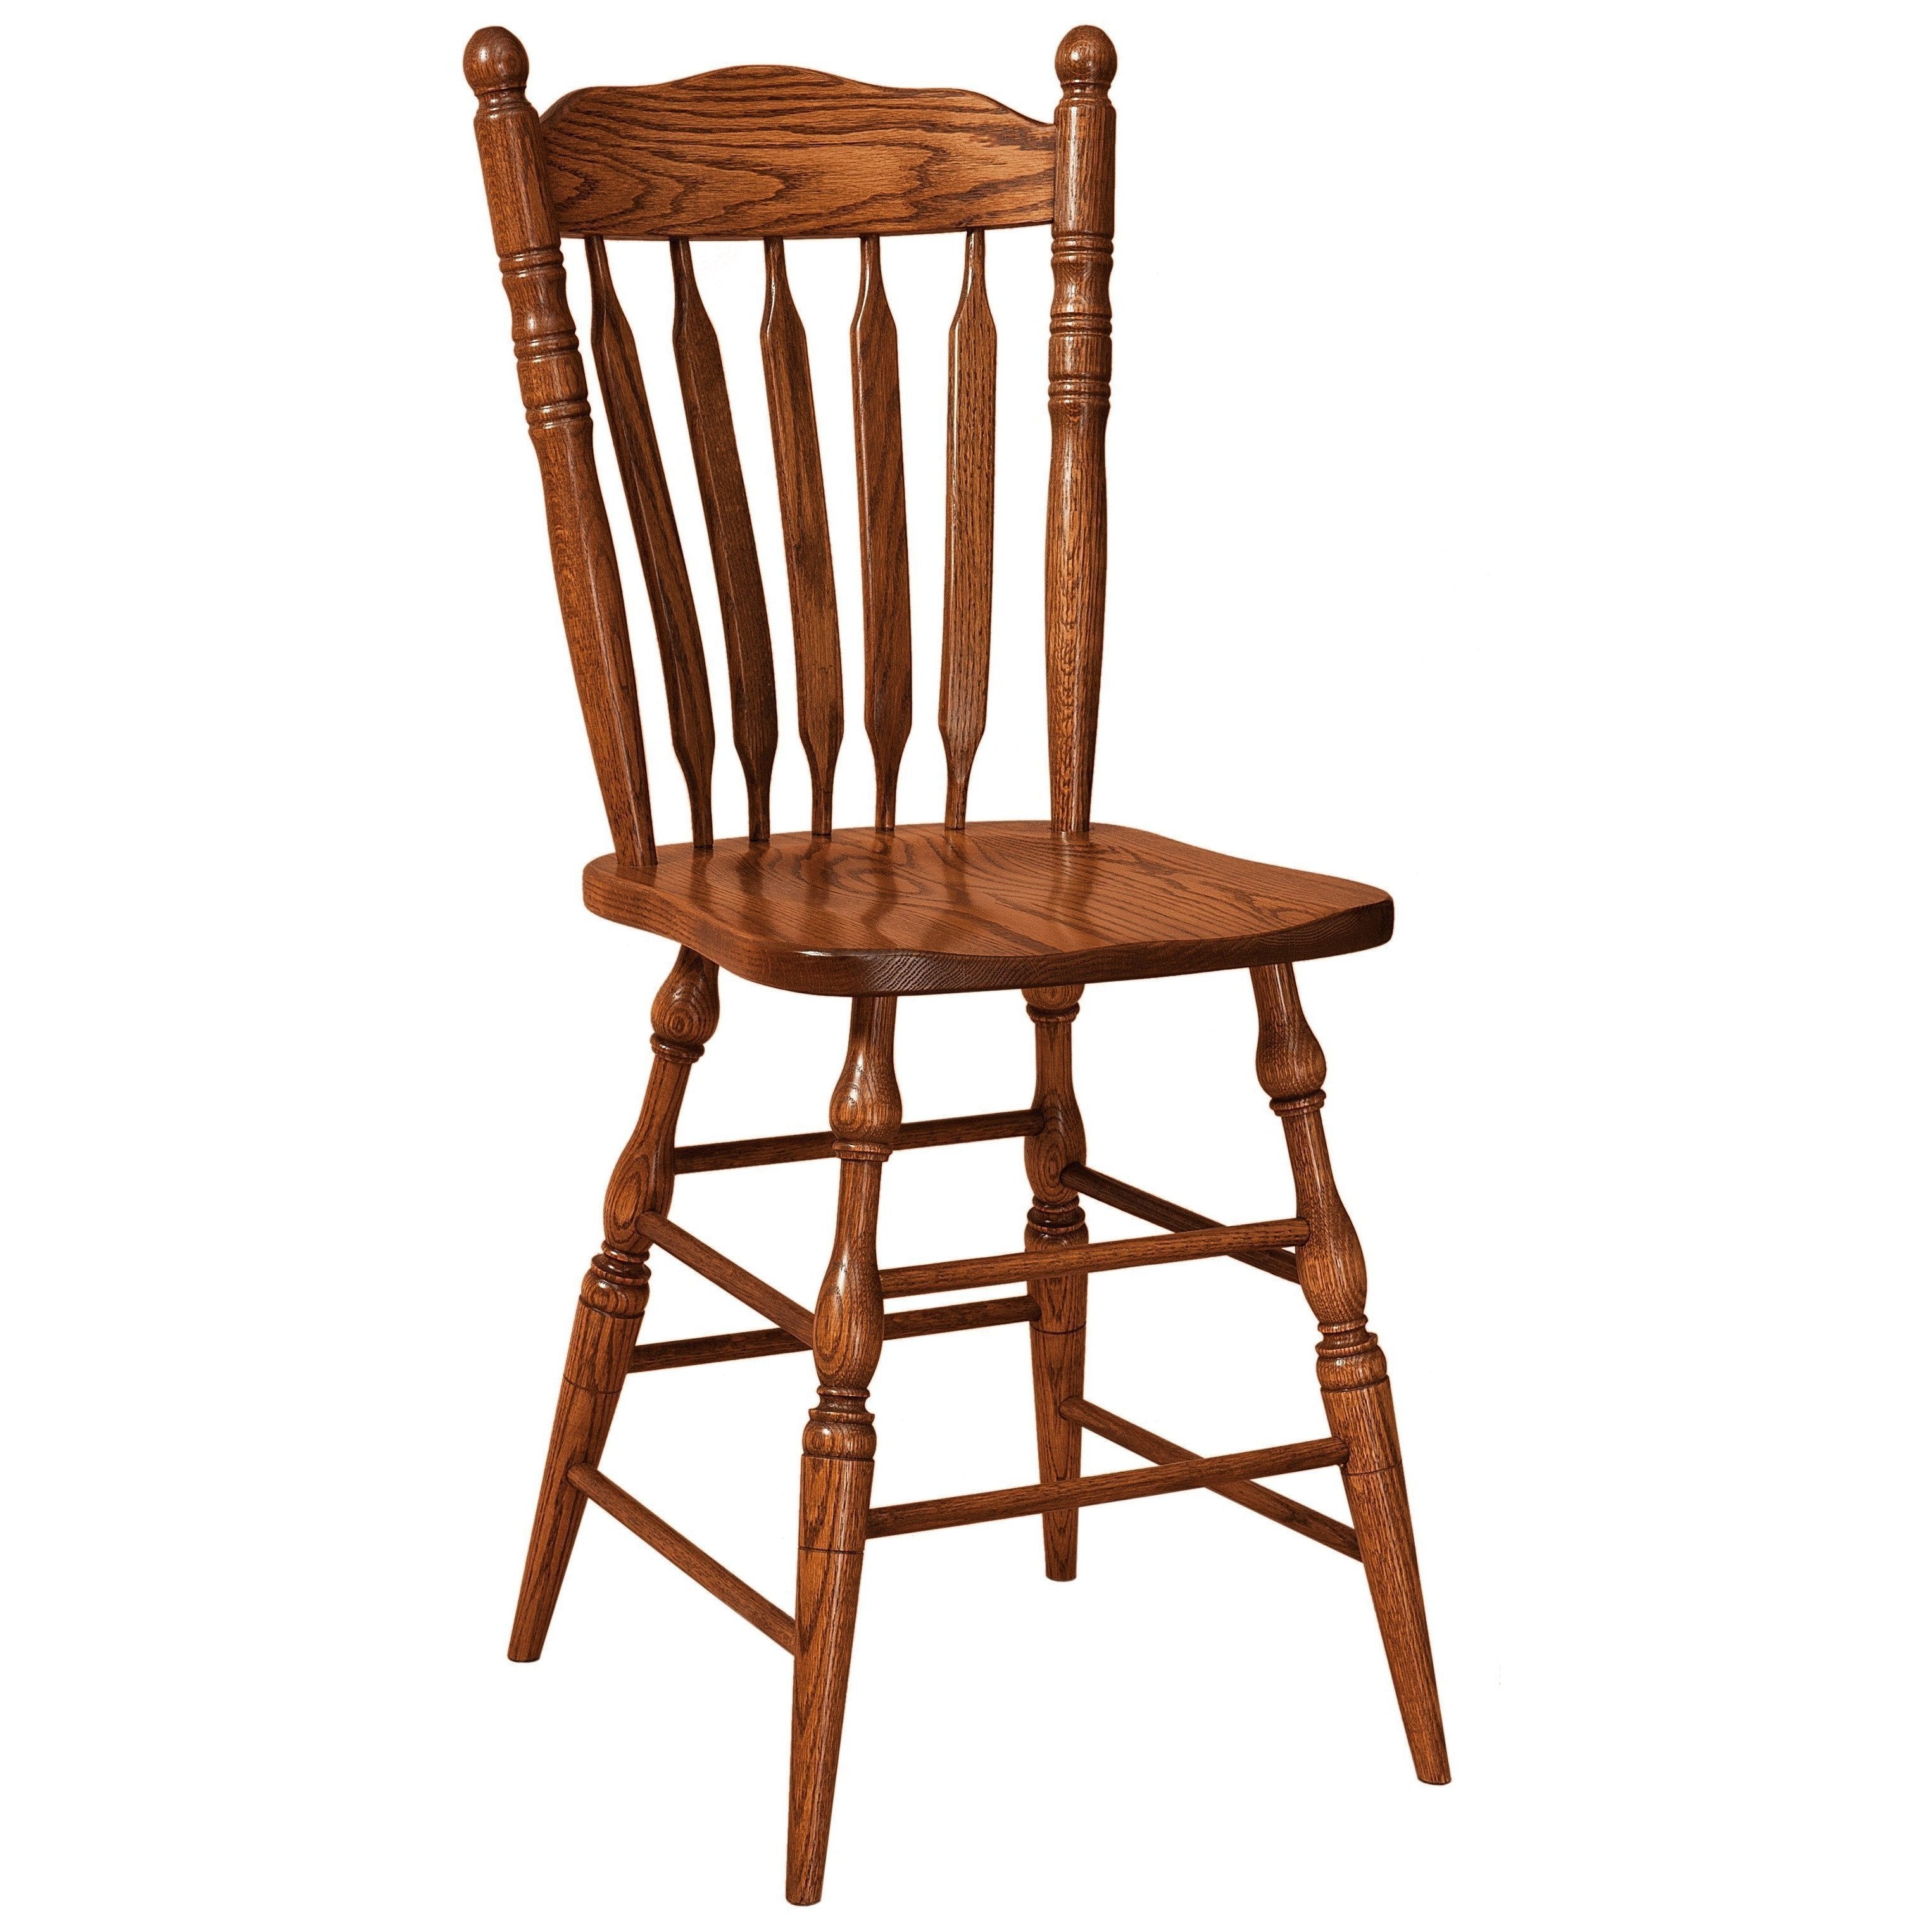 postpaddle-bar-chair-260269.jpg